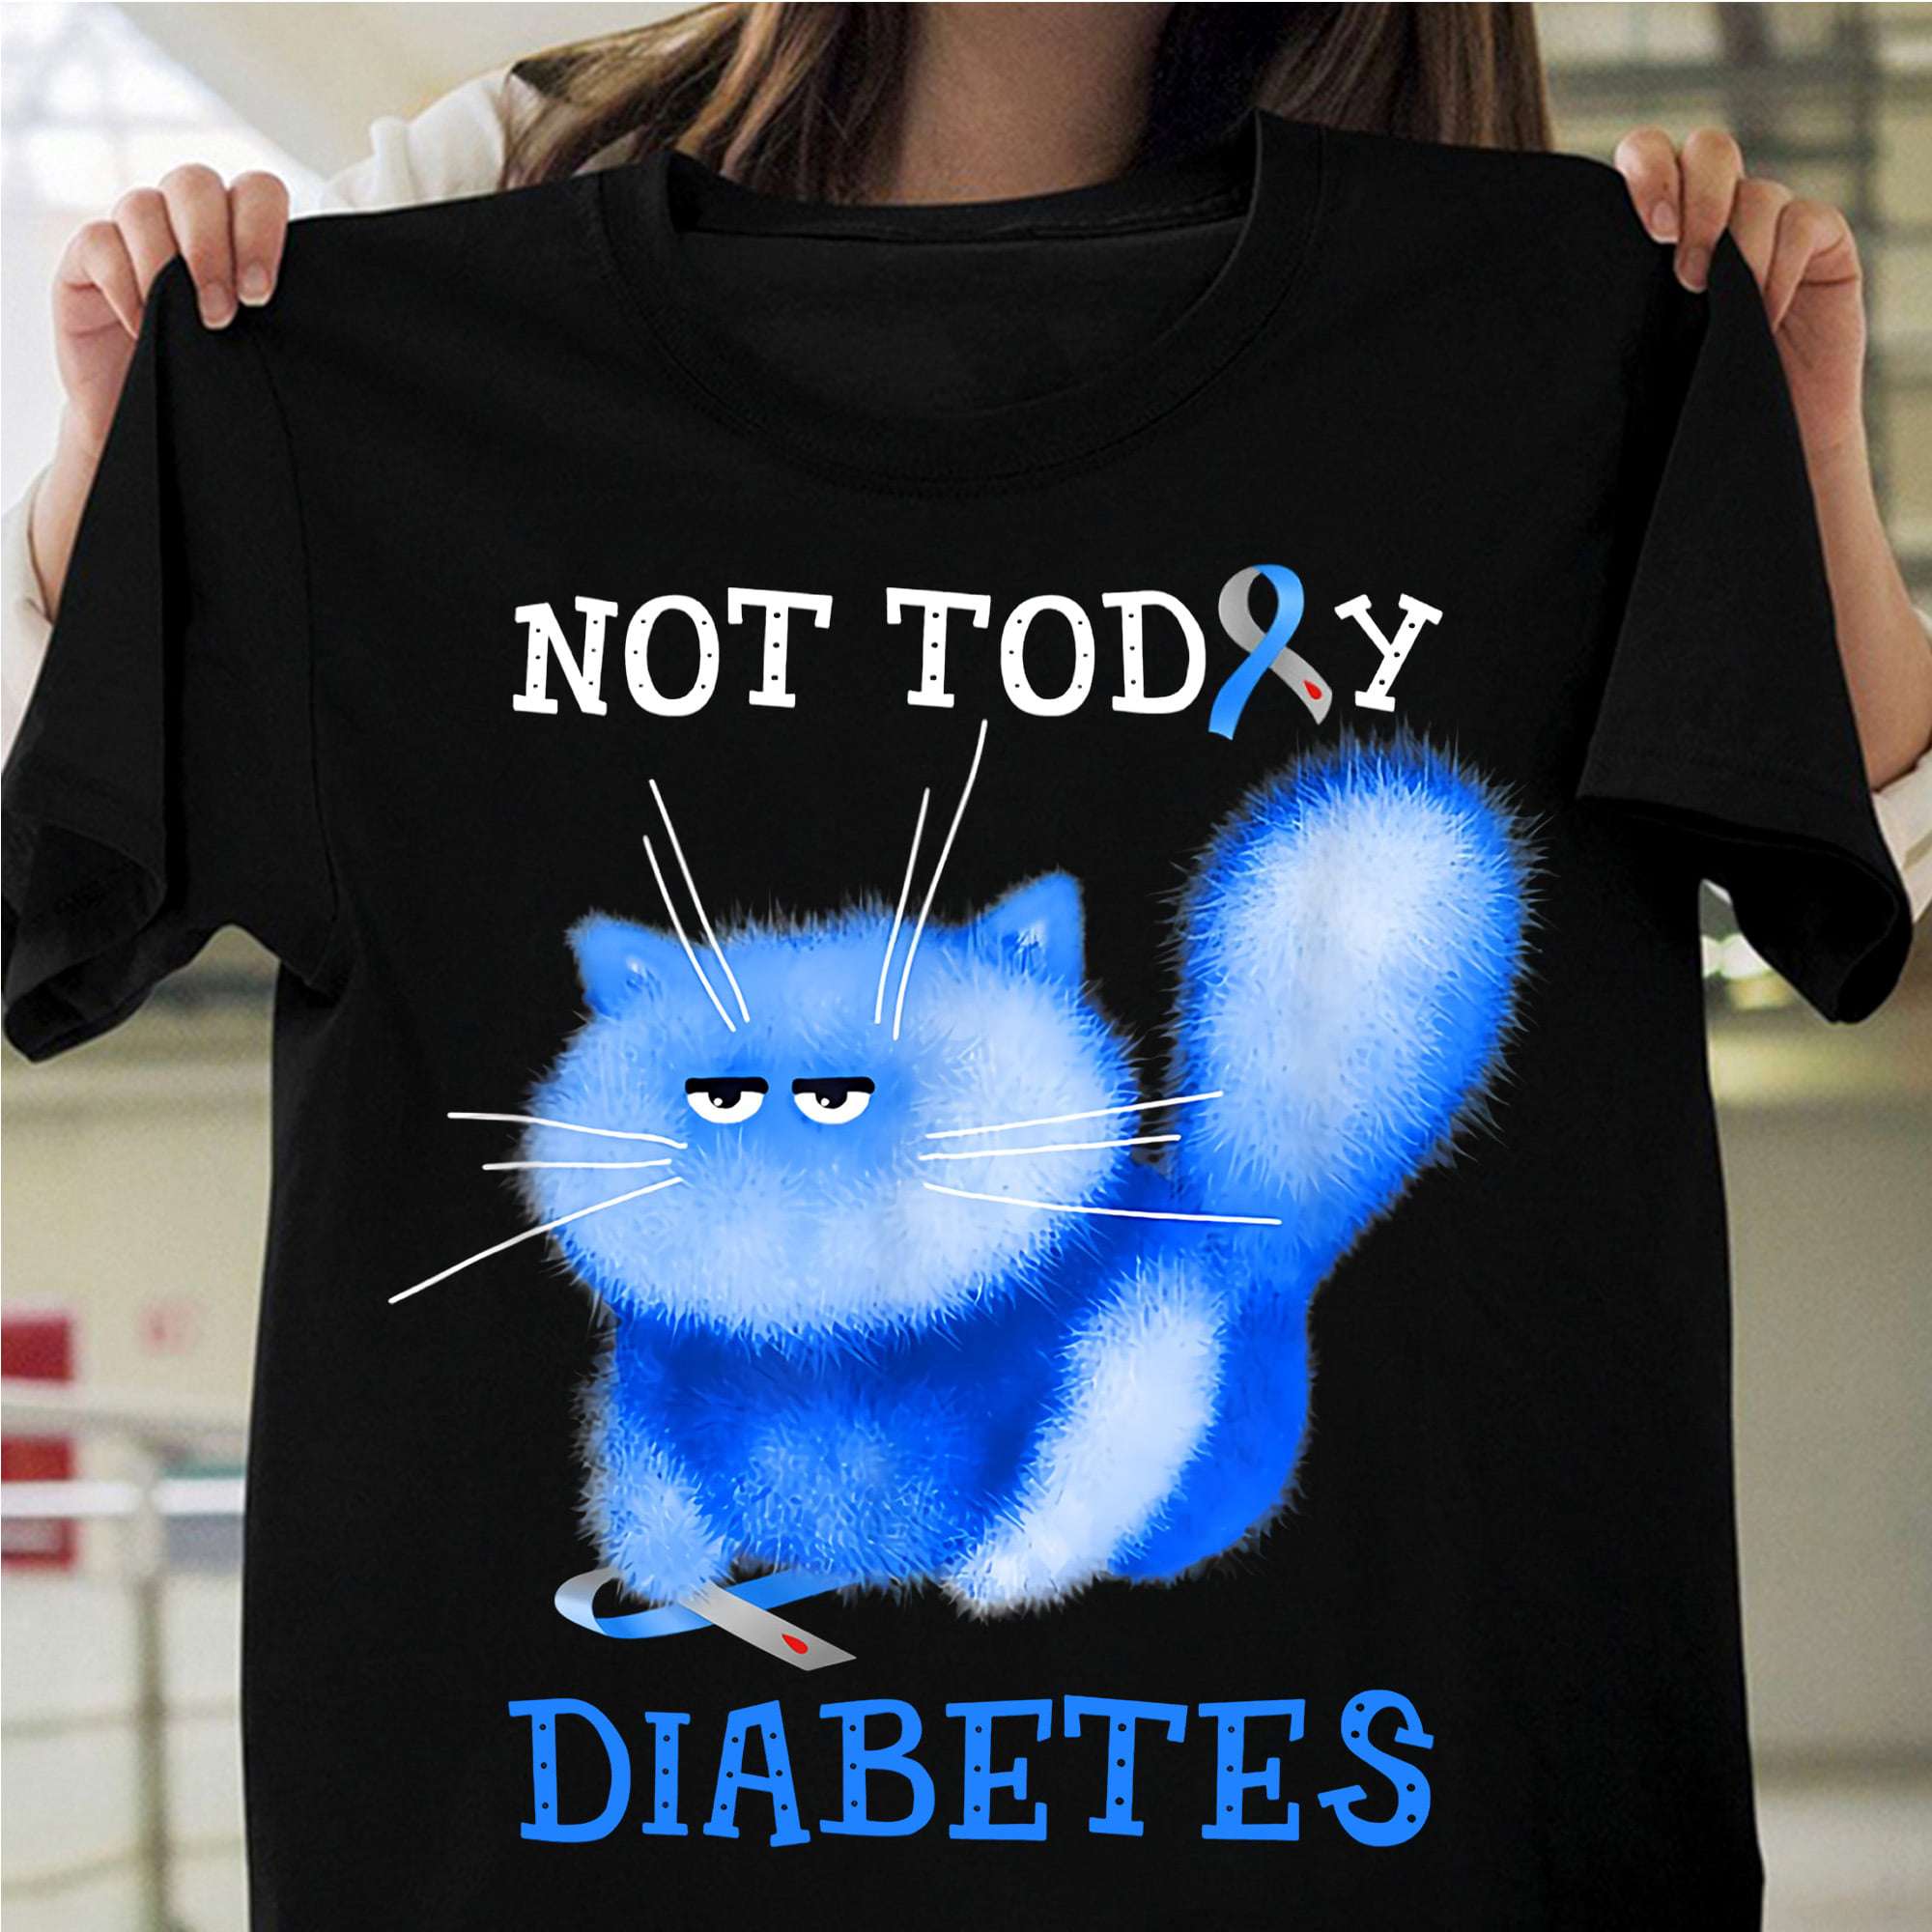 Not today Diabetes - Diabetes awareness, diabetic furry cat